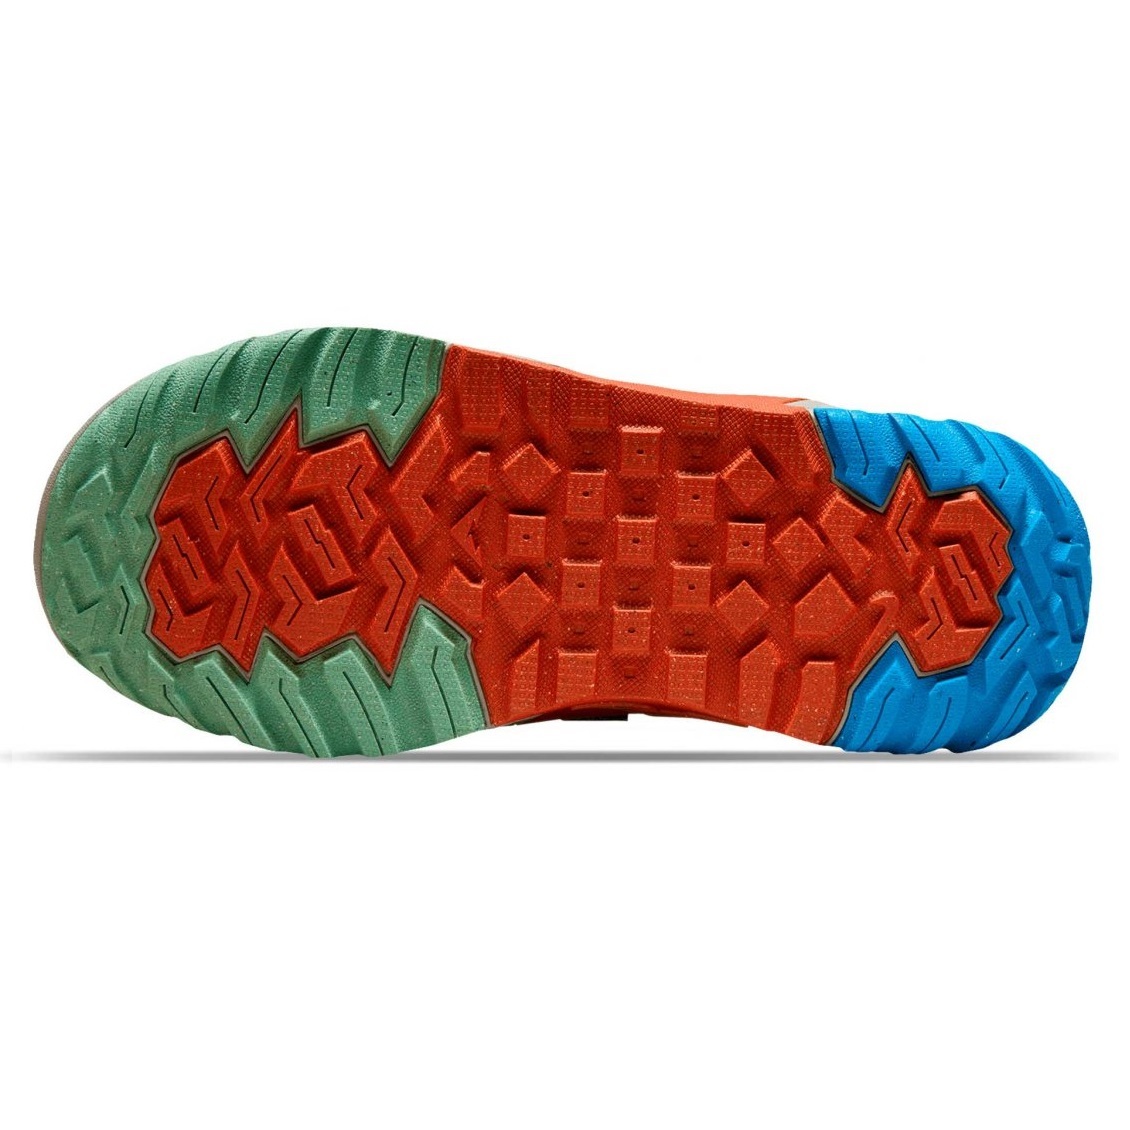 # Nike oni on ta sandals black / enamel green /kobru Stone new goods 29.0cm US11 NIKE ONEONTA SANDAL outdoor DJ6603-003